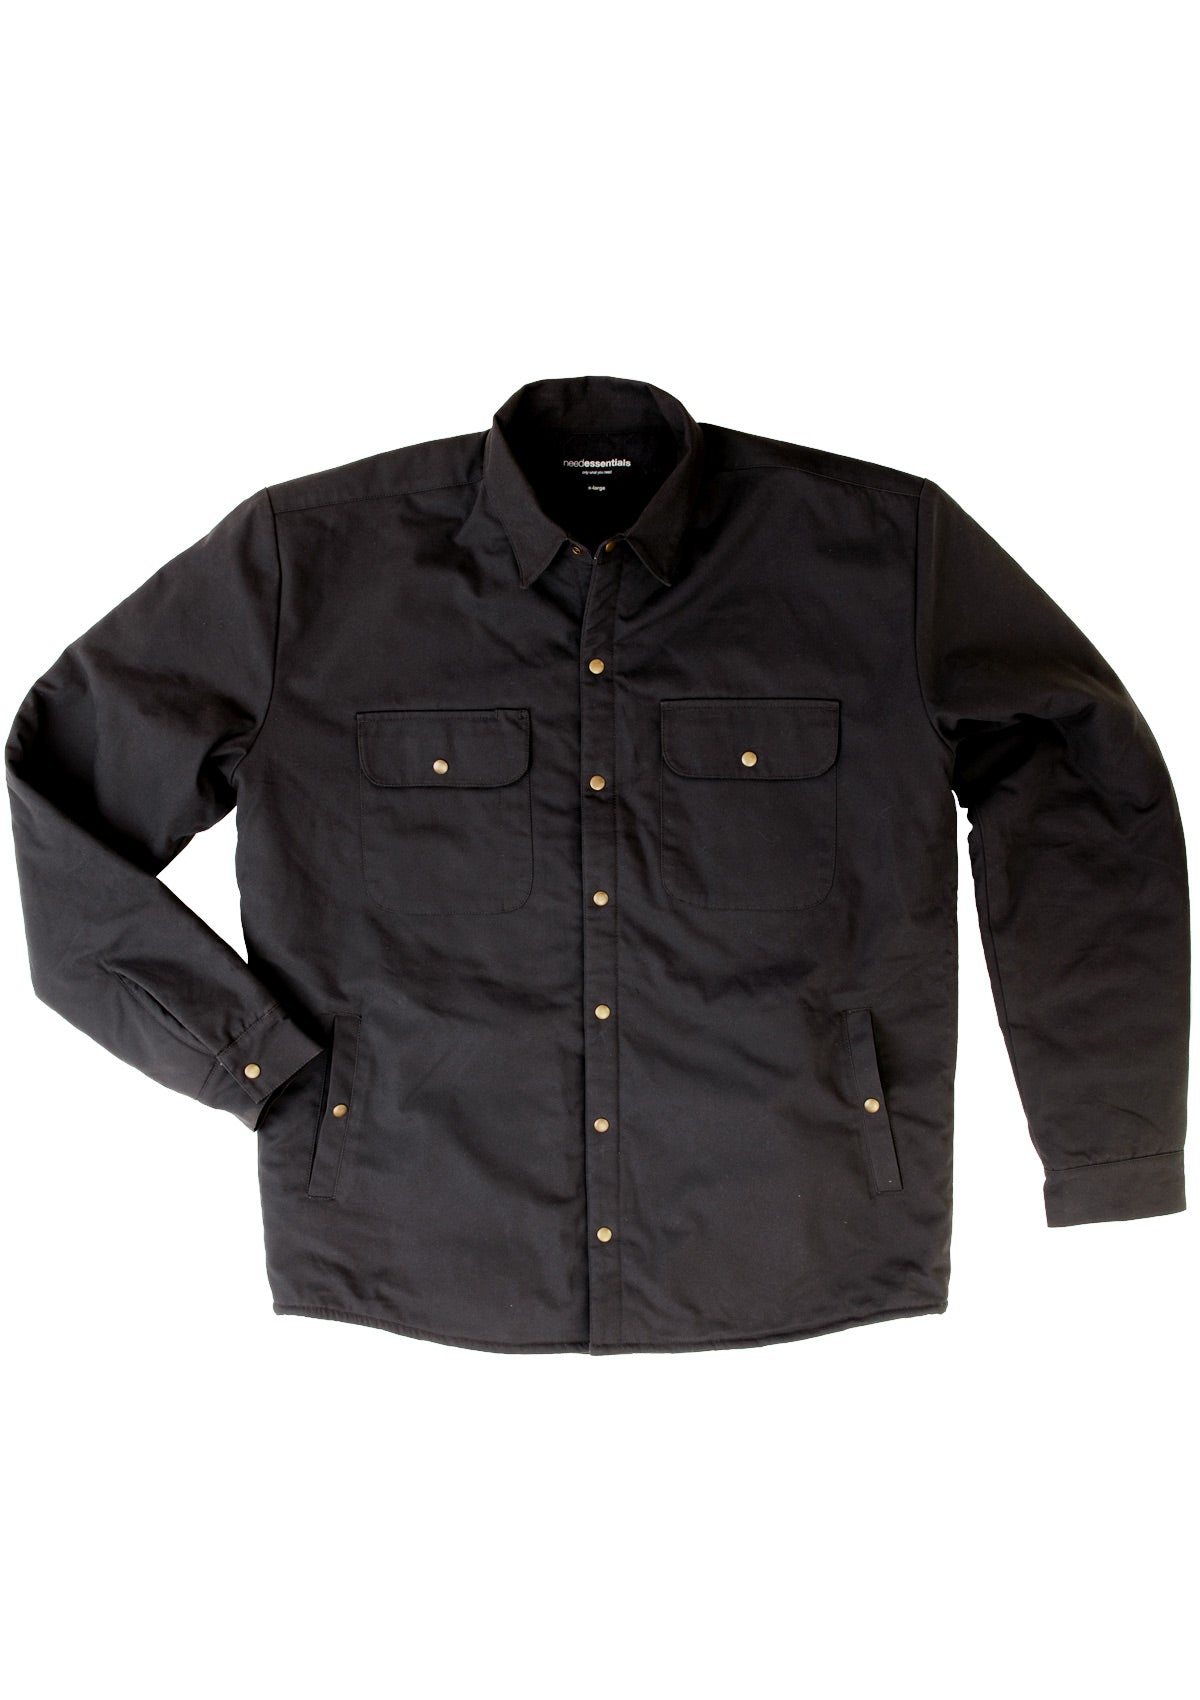 needessentials organic cotton wool insulated jacket black torren martyn